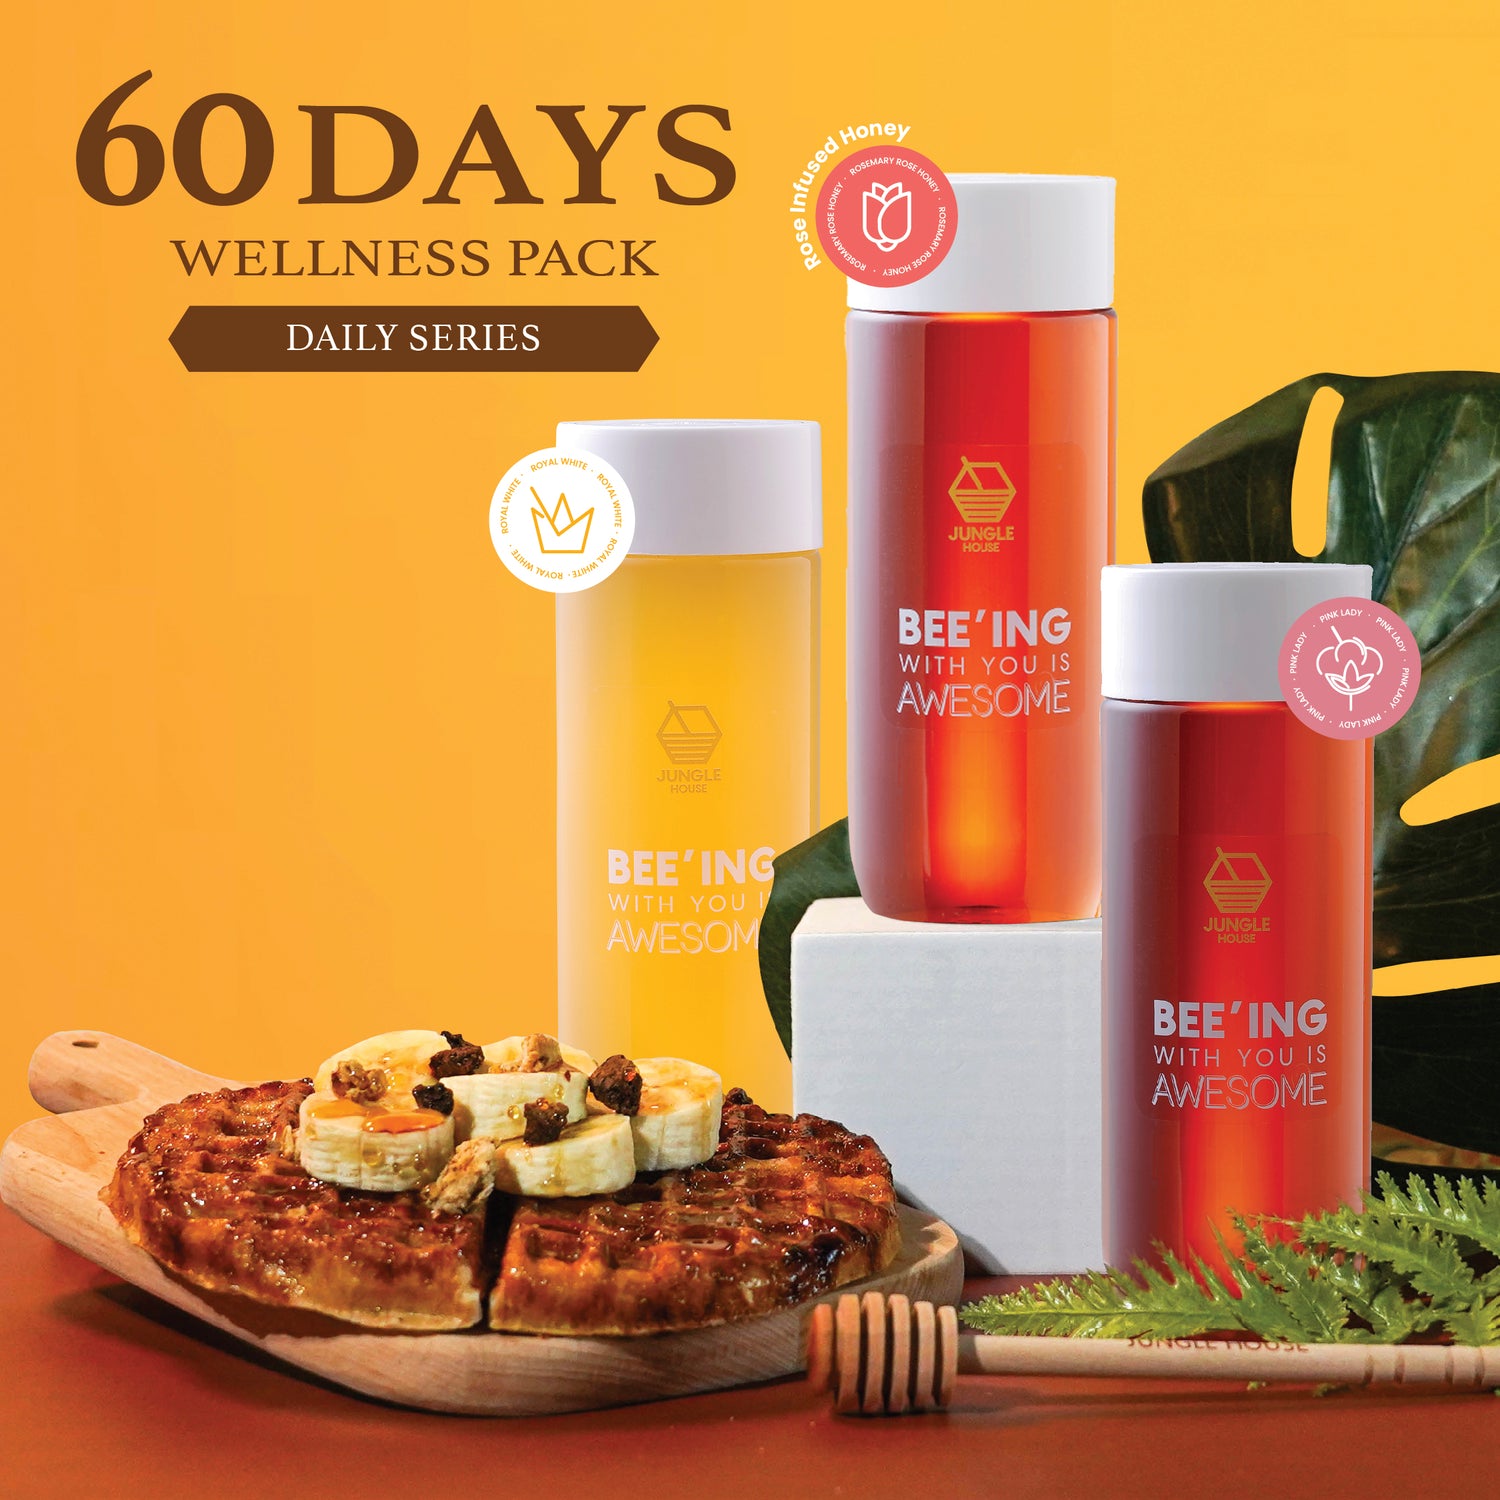 60 Days Wellness Pack